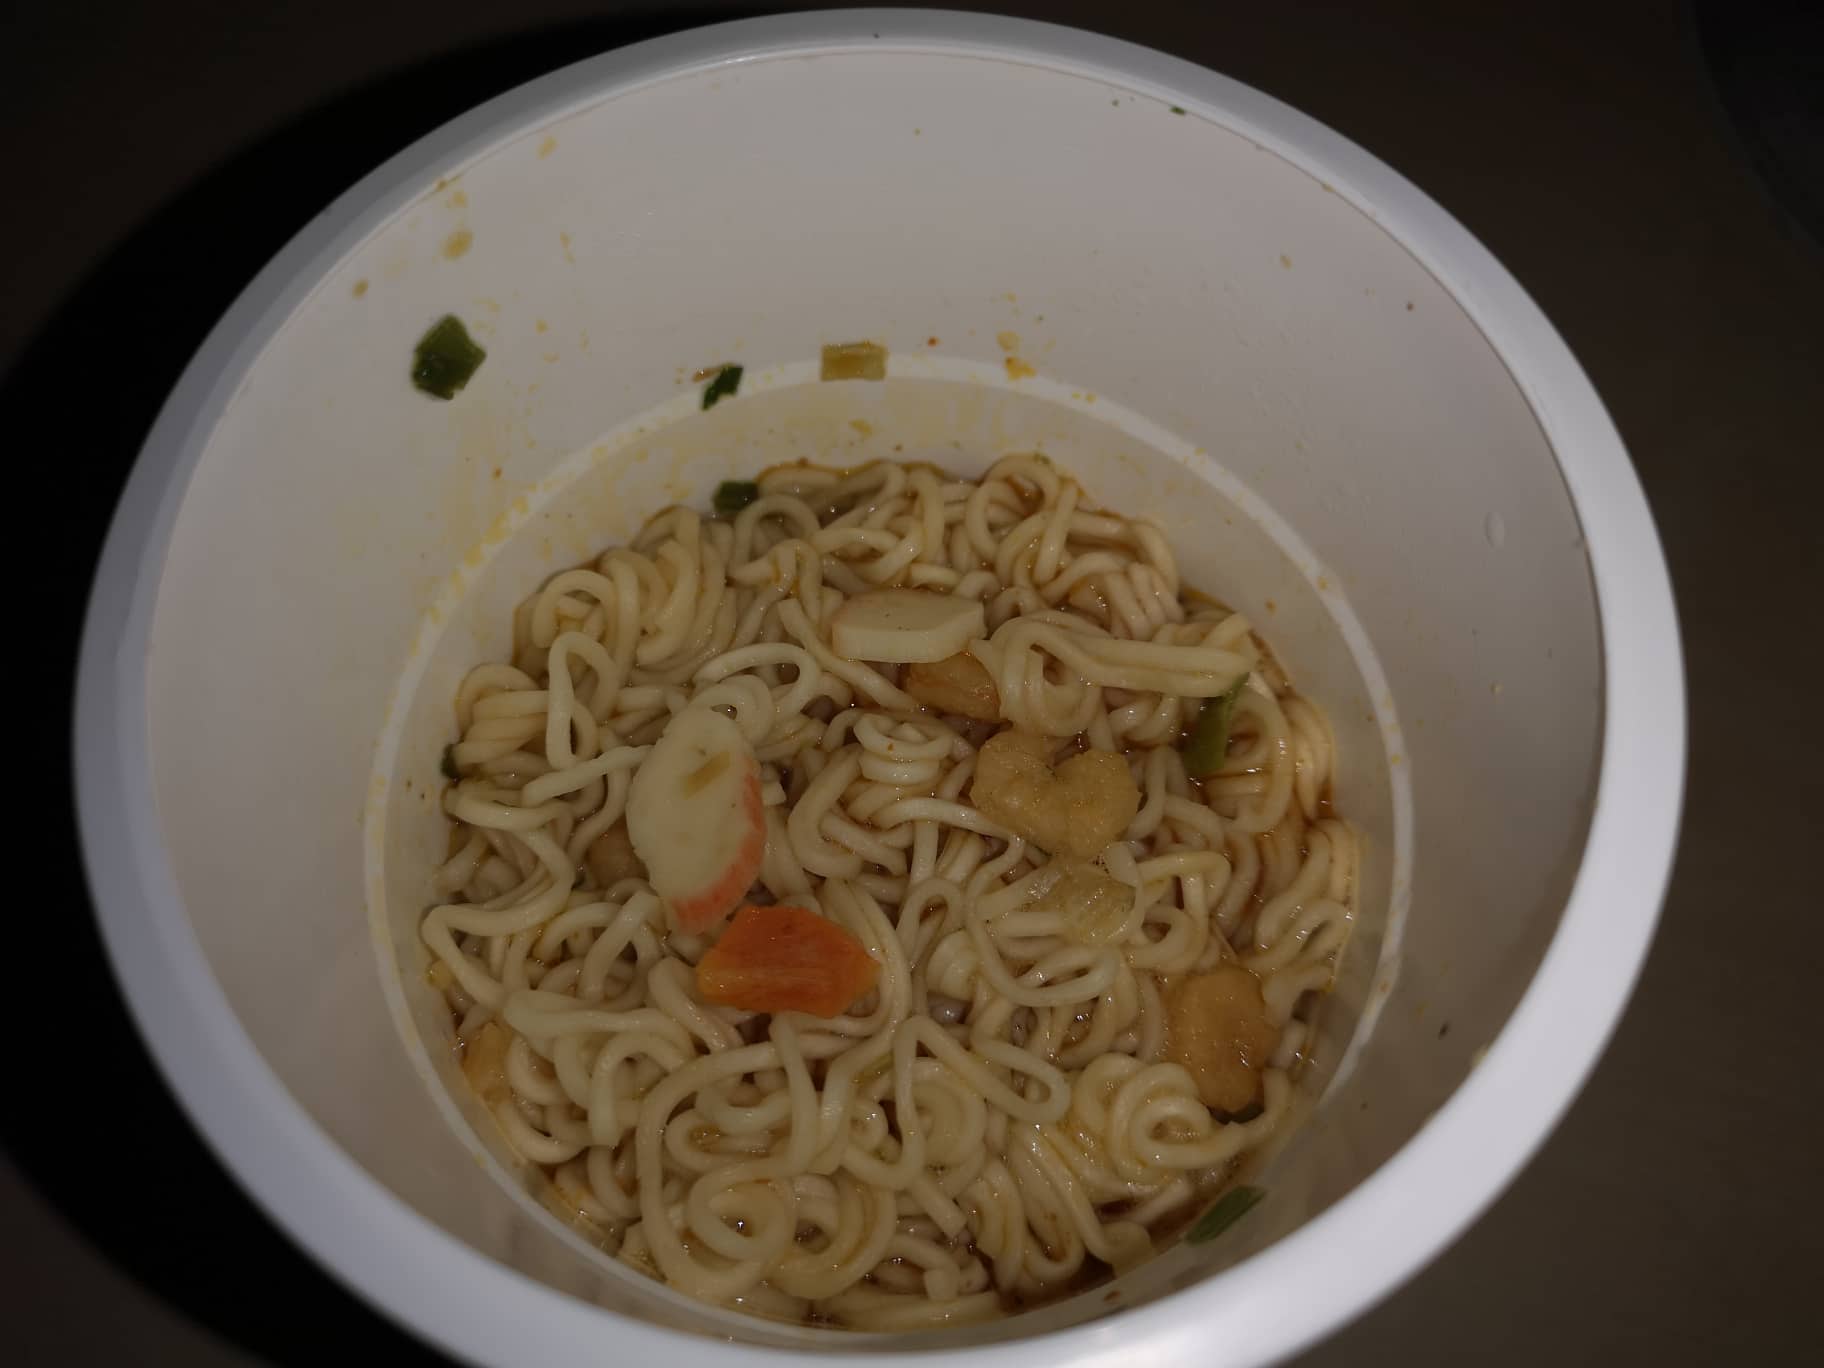 #1738: YumYum Asian Cuisine "Shrimp Flavour" Cup (Update 2022)